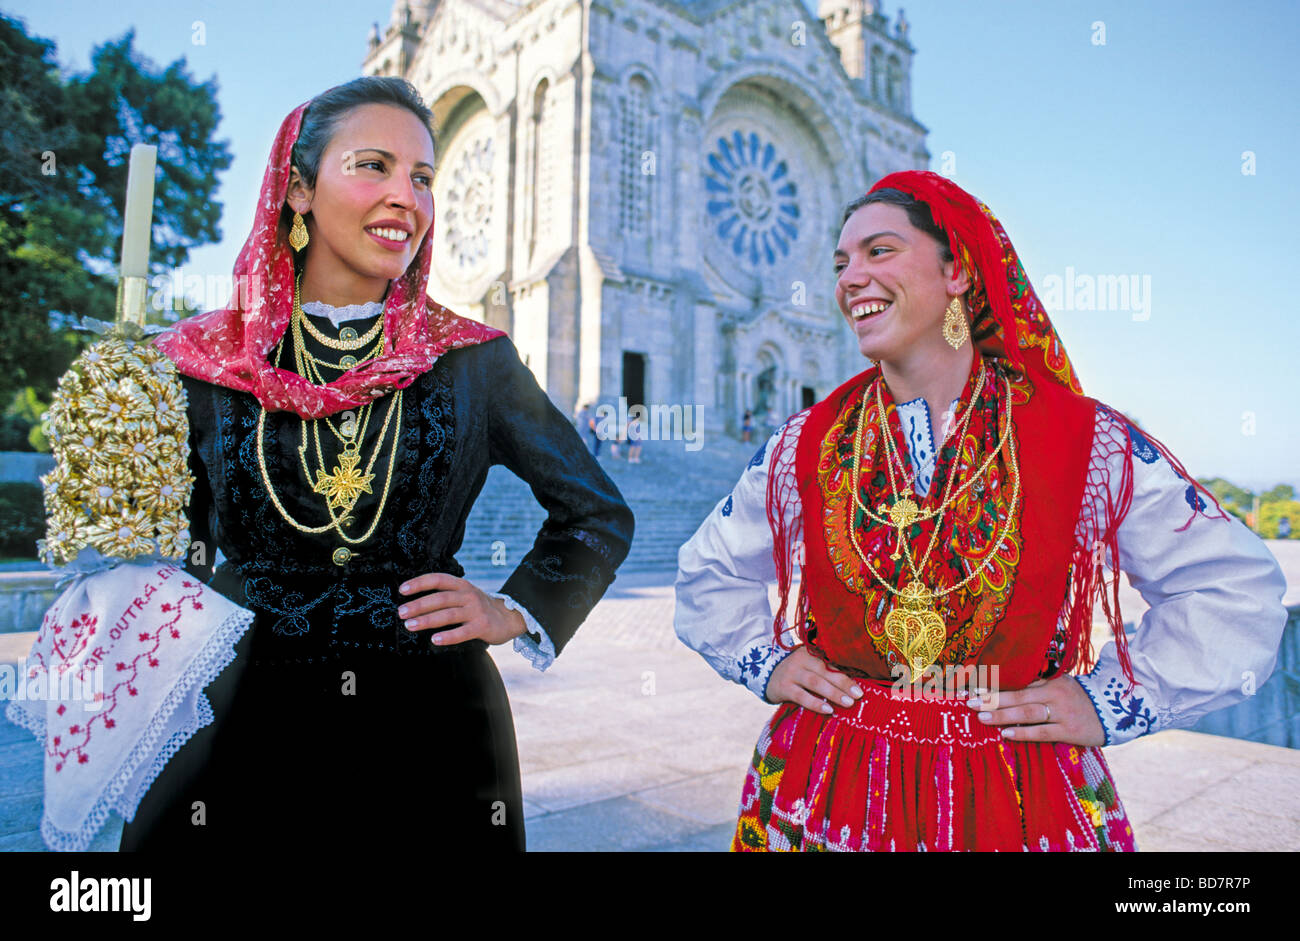 Portugal, Minho: Mädchen in traditionellen Kostümen vor der Basilika Santa Luzia in Viana do Castelo Stockfoto